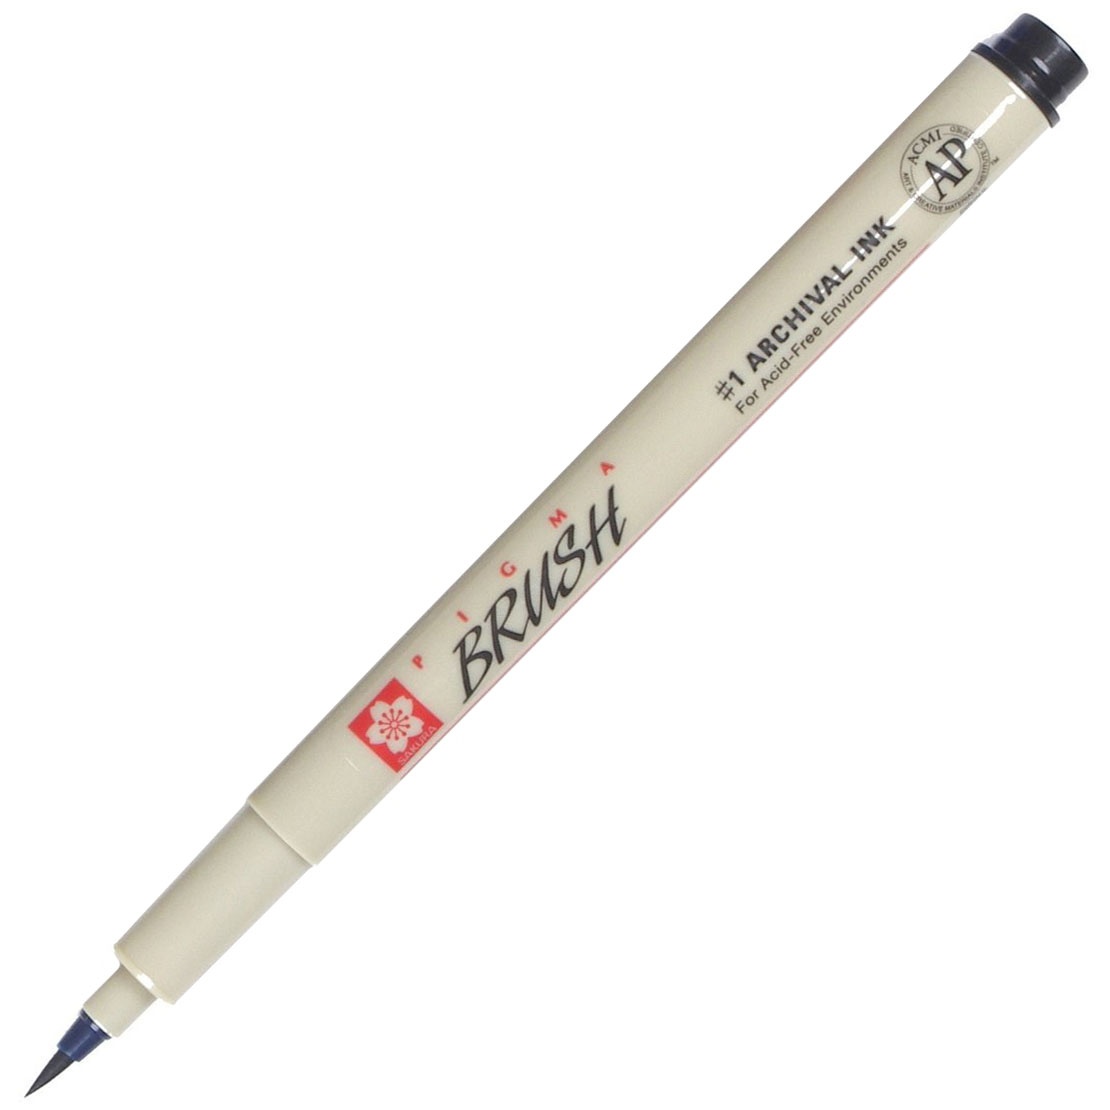 Brush Marker Pen Sakura Pigma Micron Fineliner